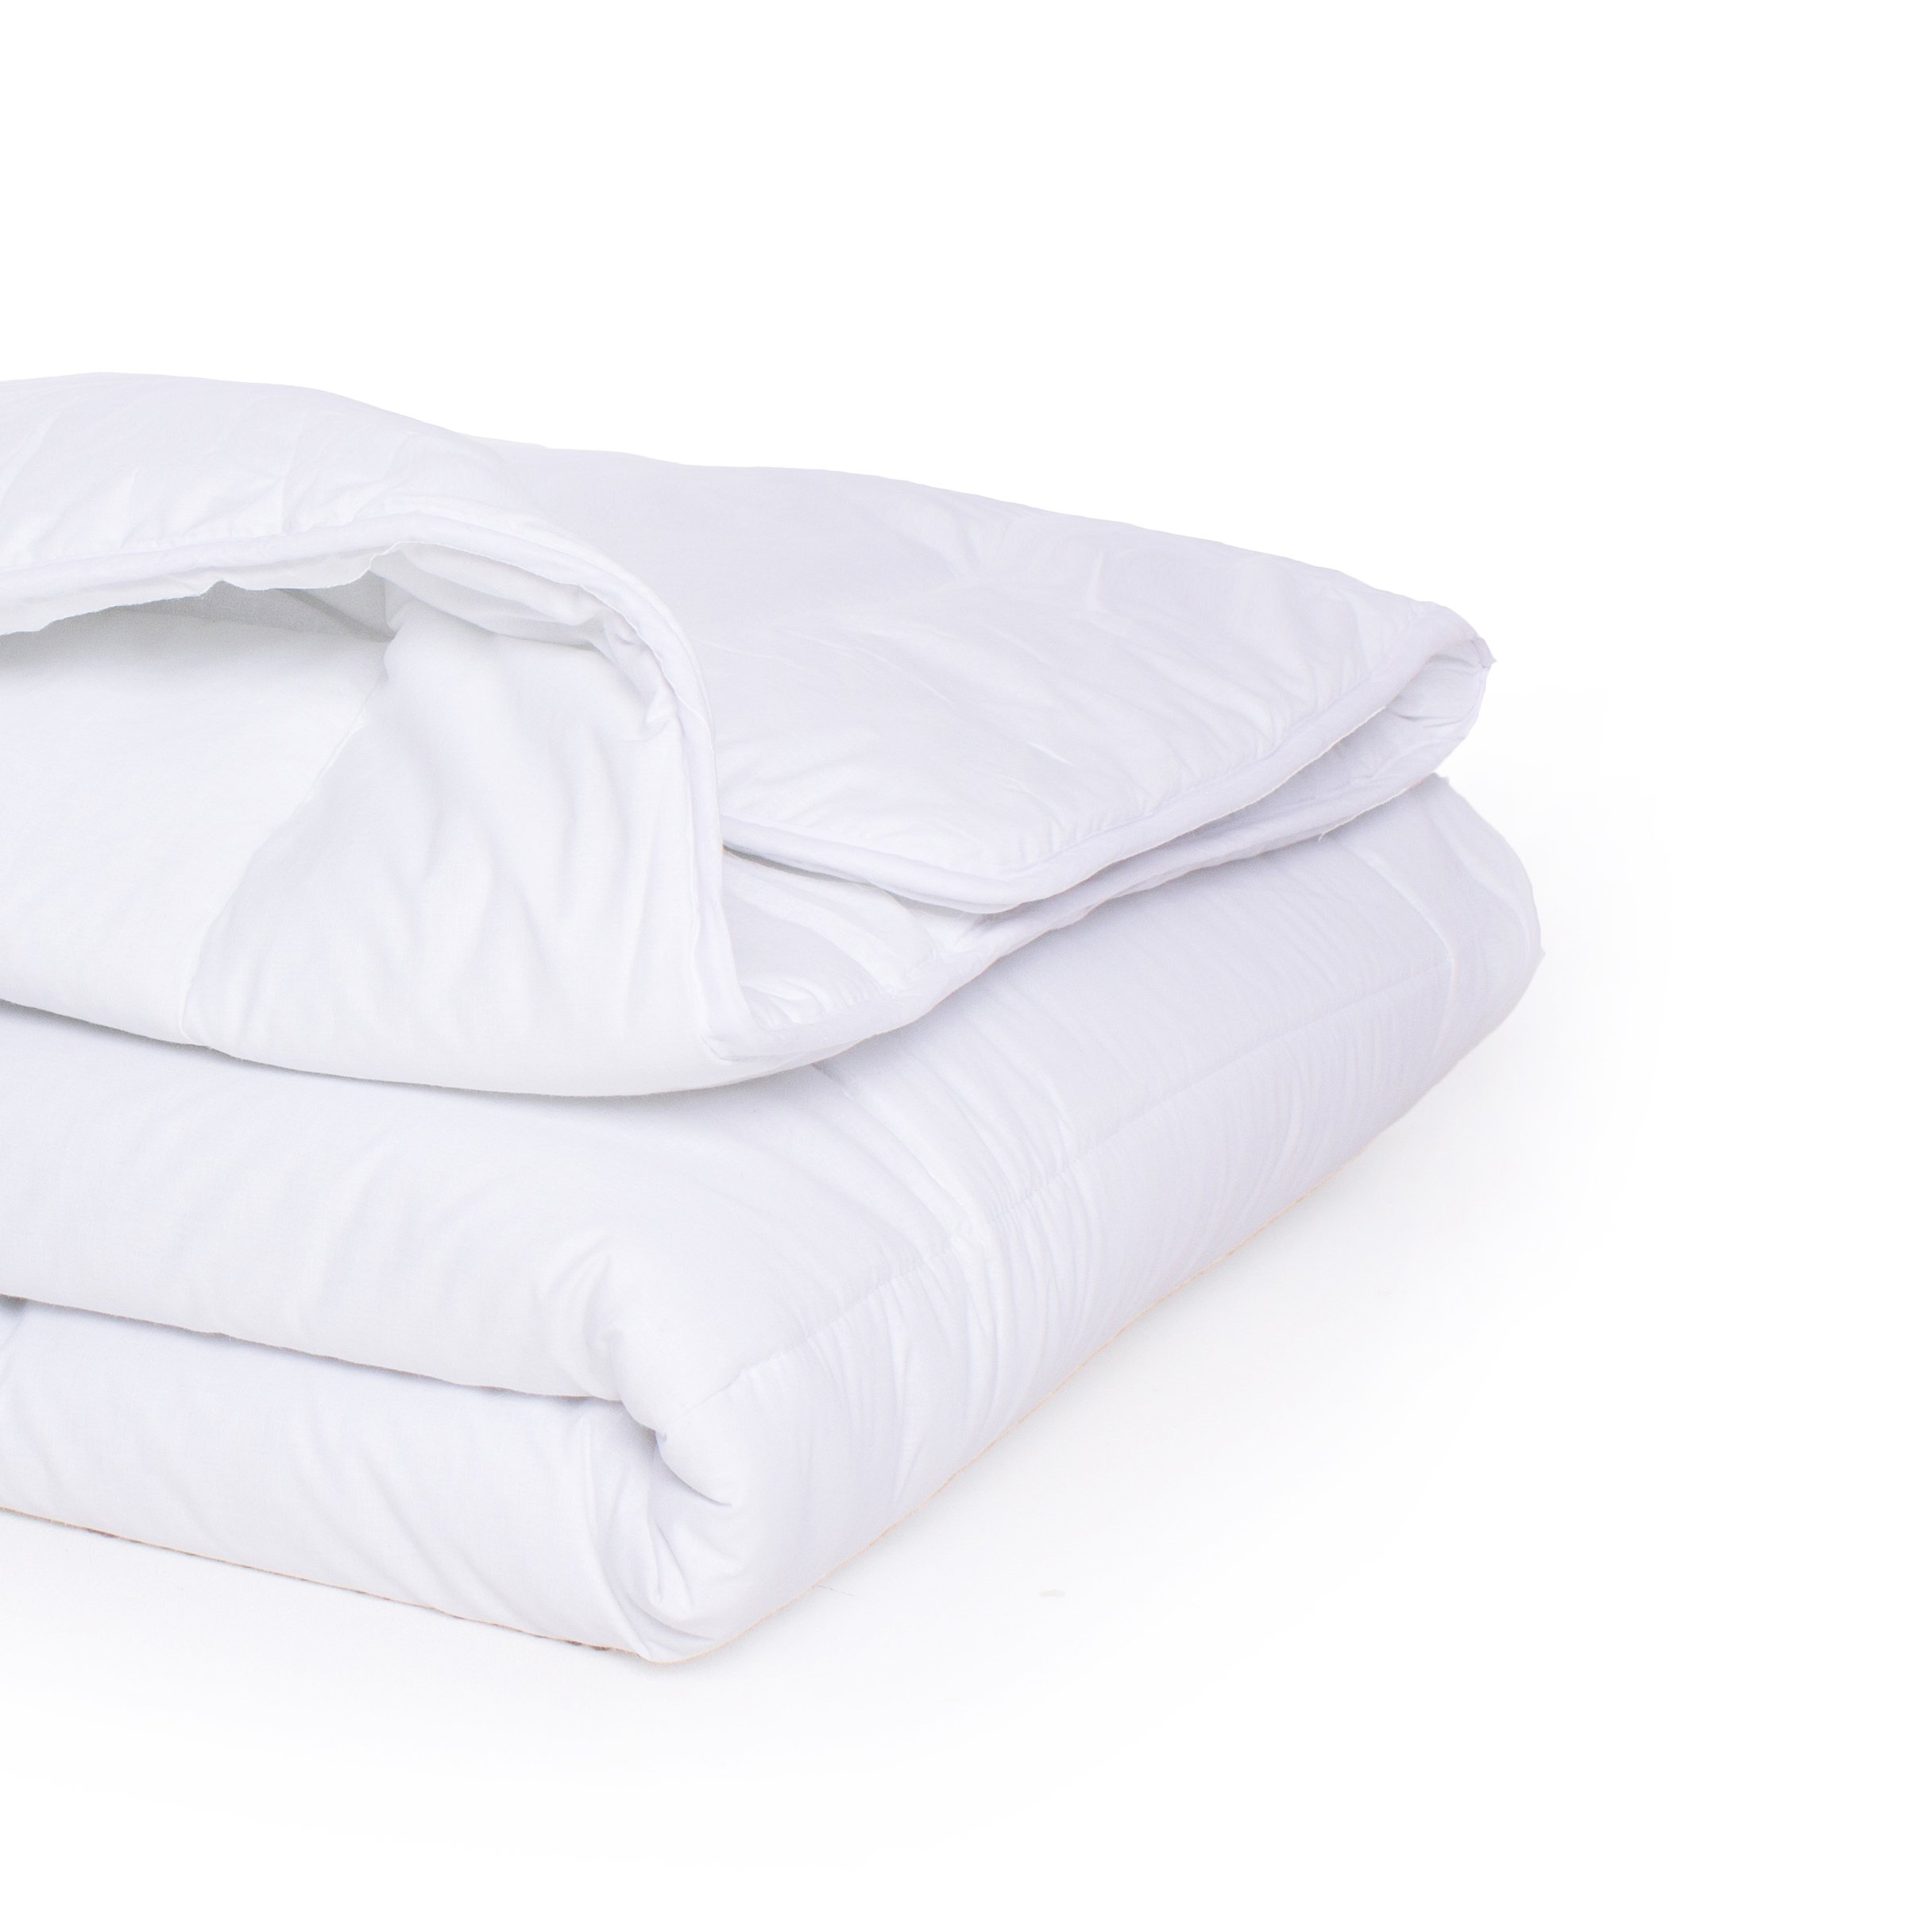 Одеяло шерстяное MirSon Bianco Экстра Премиум №0787, зимнее, 172x205 см, белое - фото 4